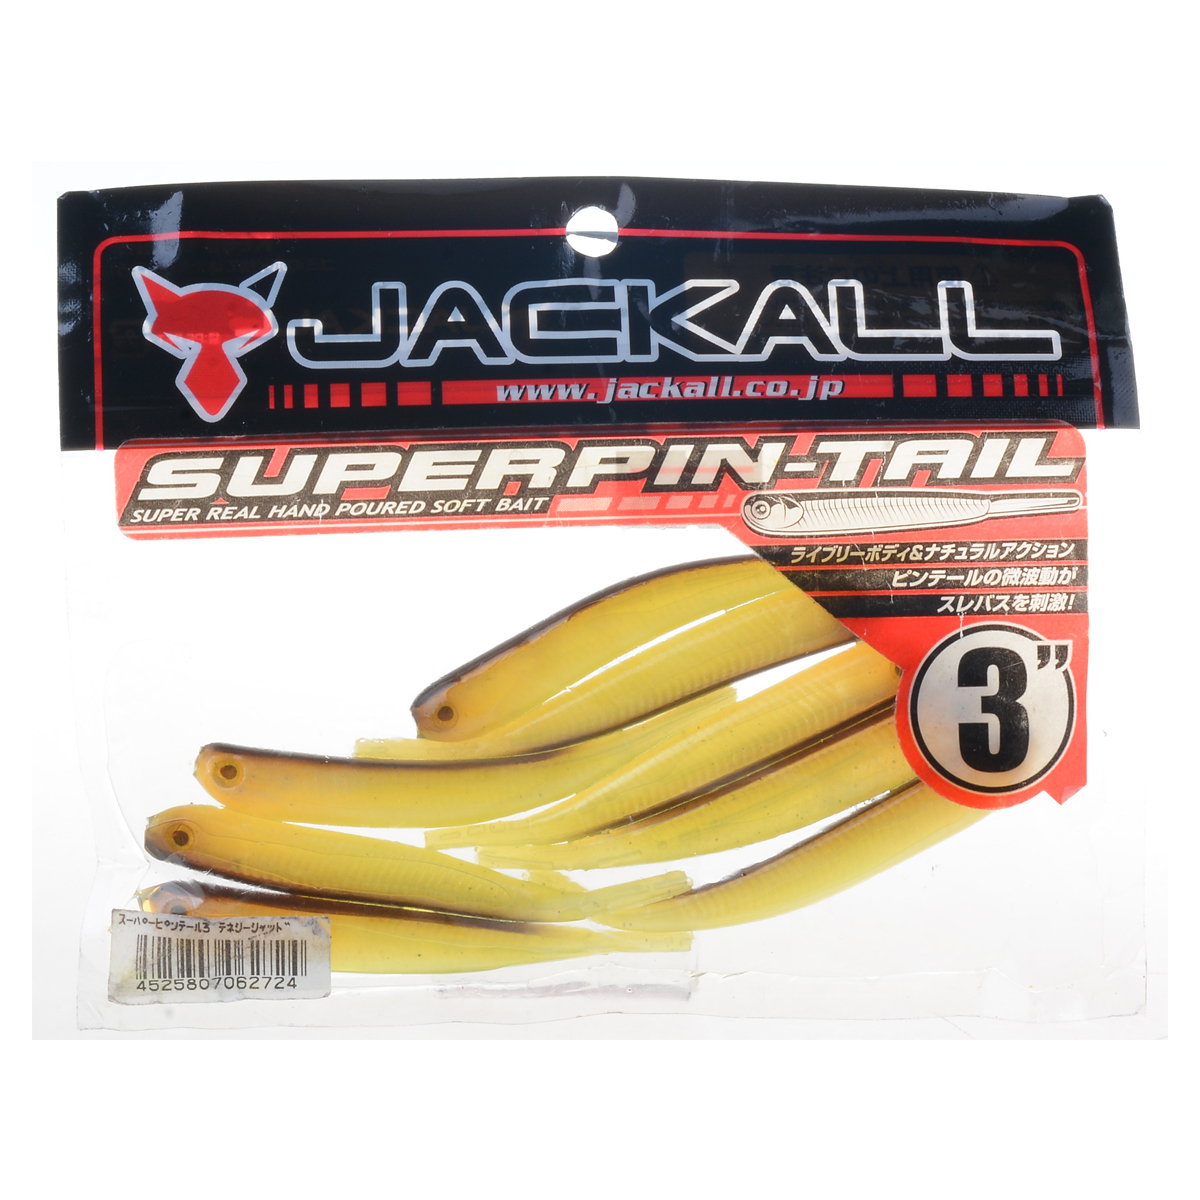 Jackall Superpin-Tail 3 #2724*เหยื่อปลายาง - 7 SEAS PROSHOP (THAILAND)